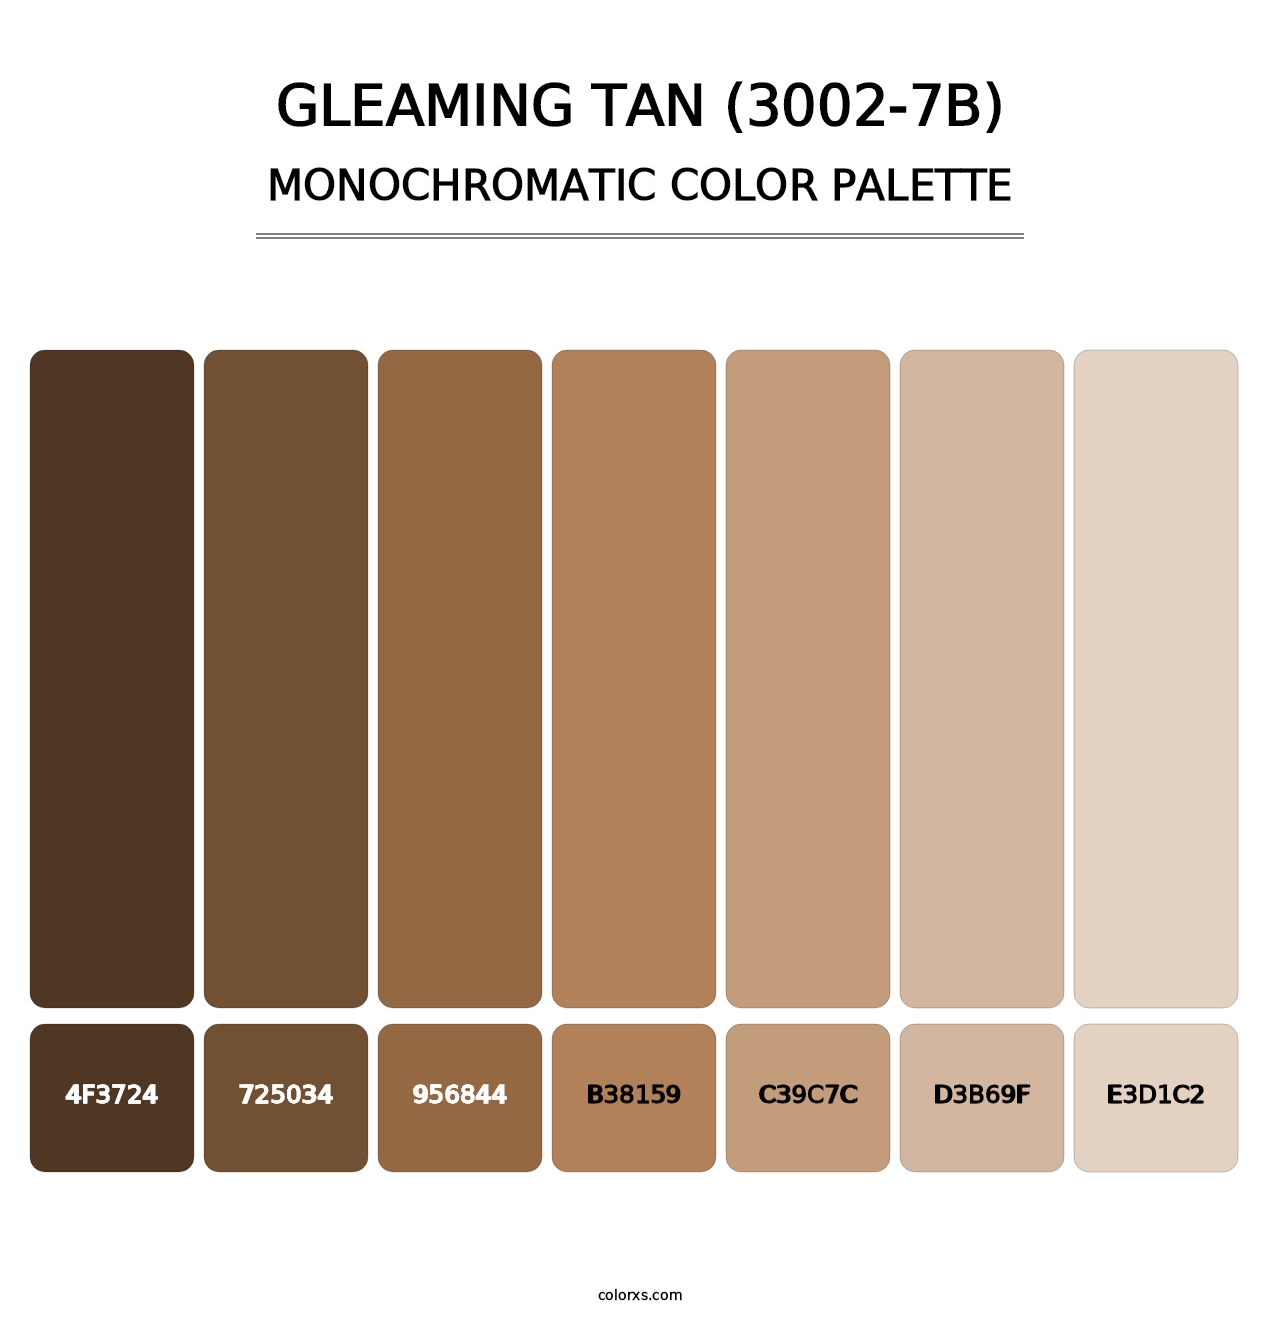 Gleaming Tan (3002-7B) - Monochromatic Color Palette